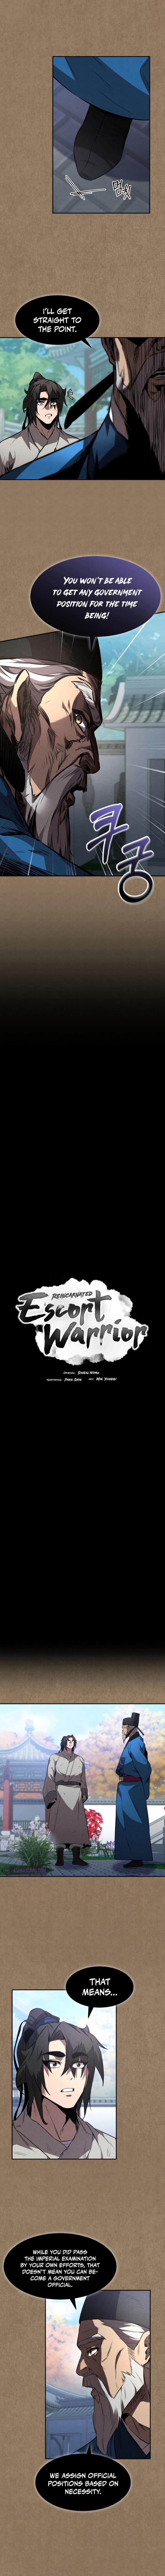 Reincarnated Escort Warrior - Chapter 34 Page 2